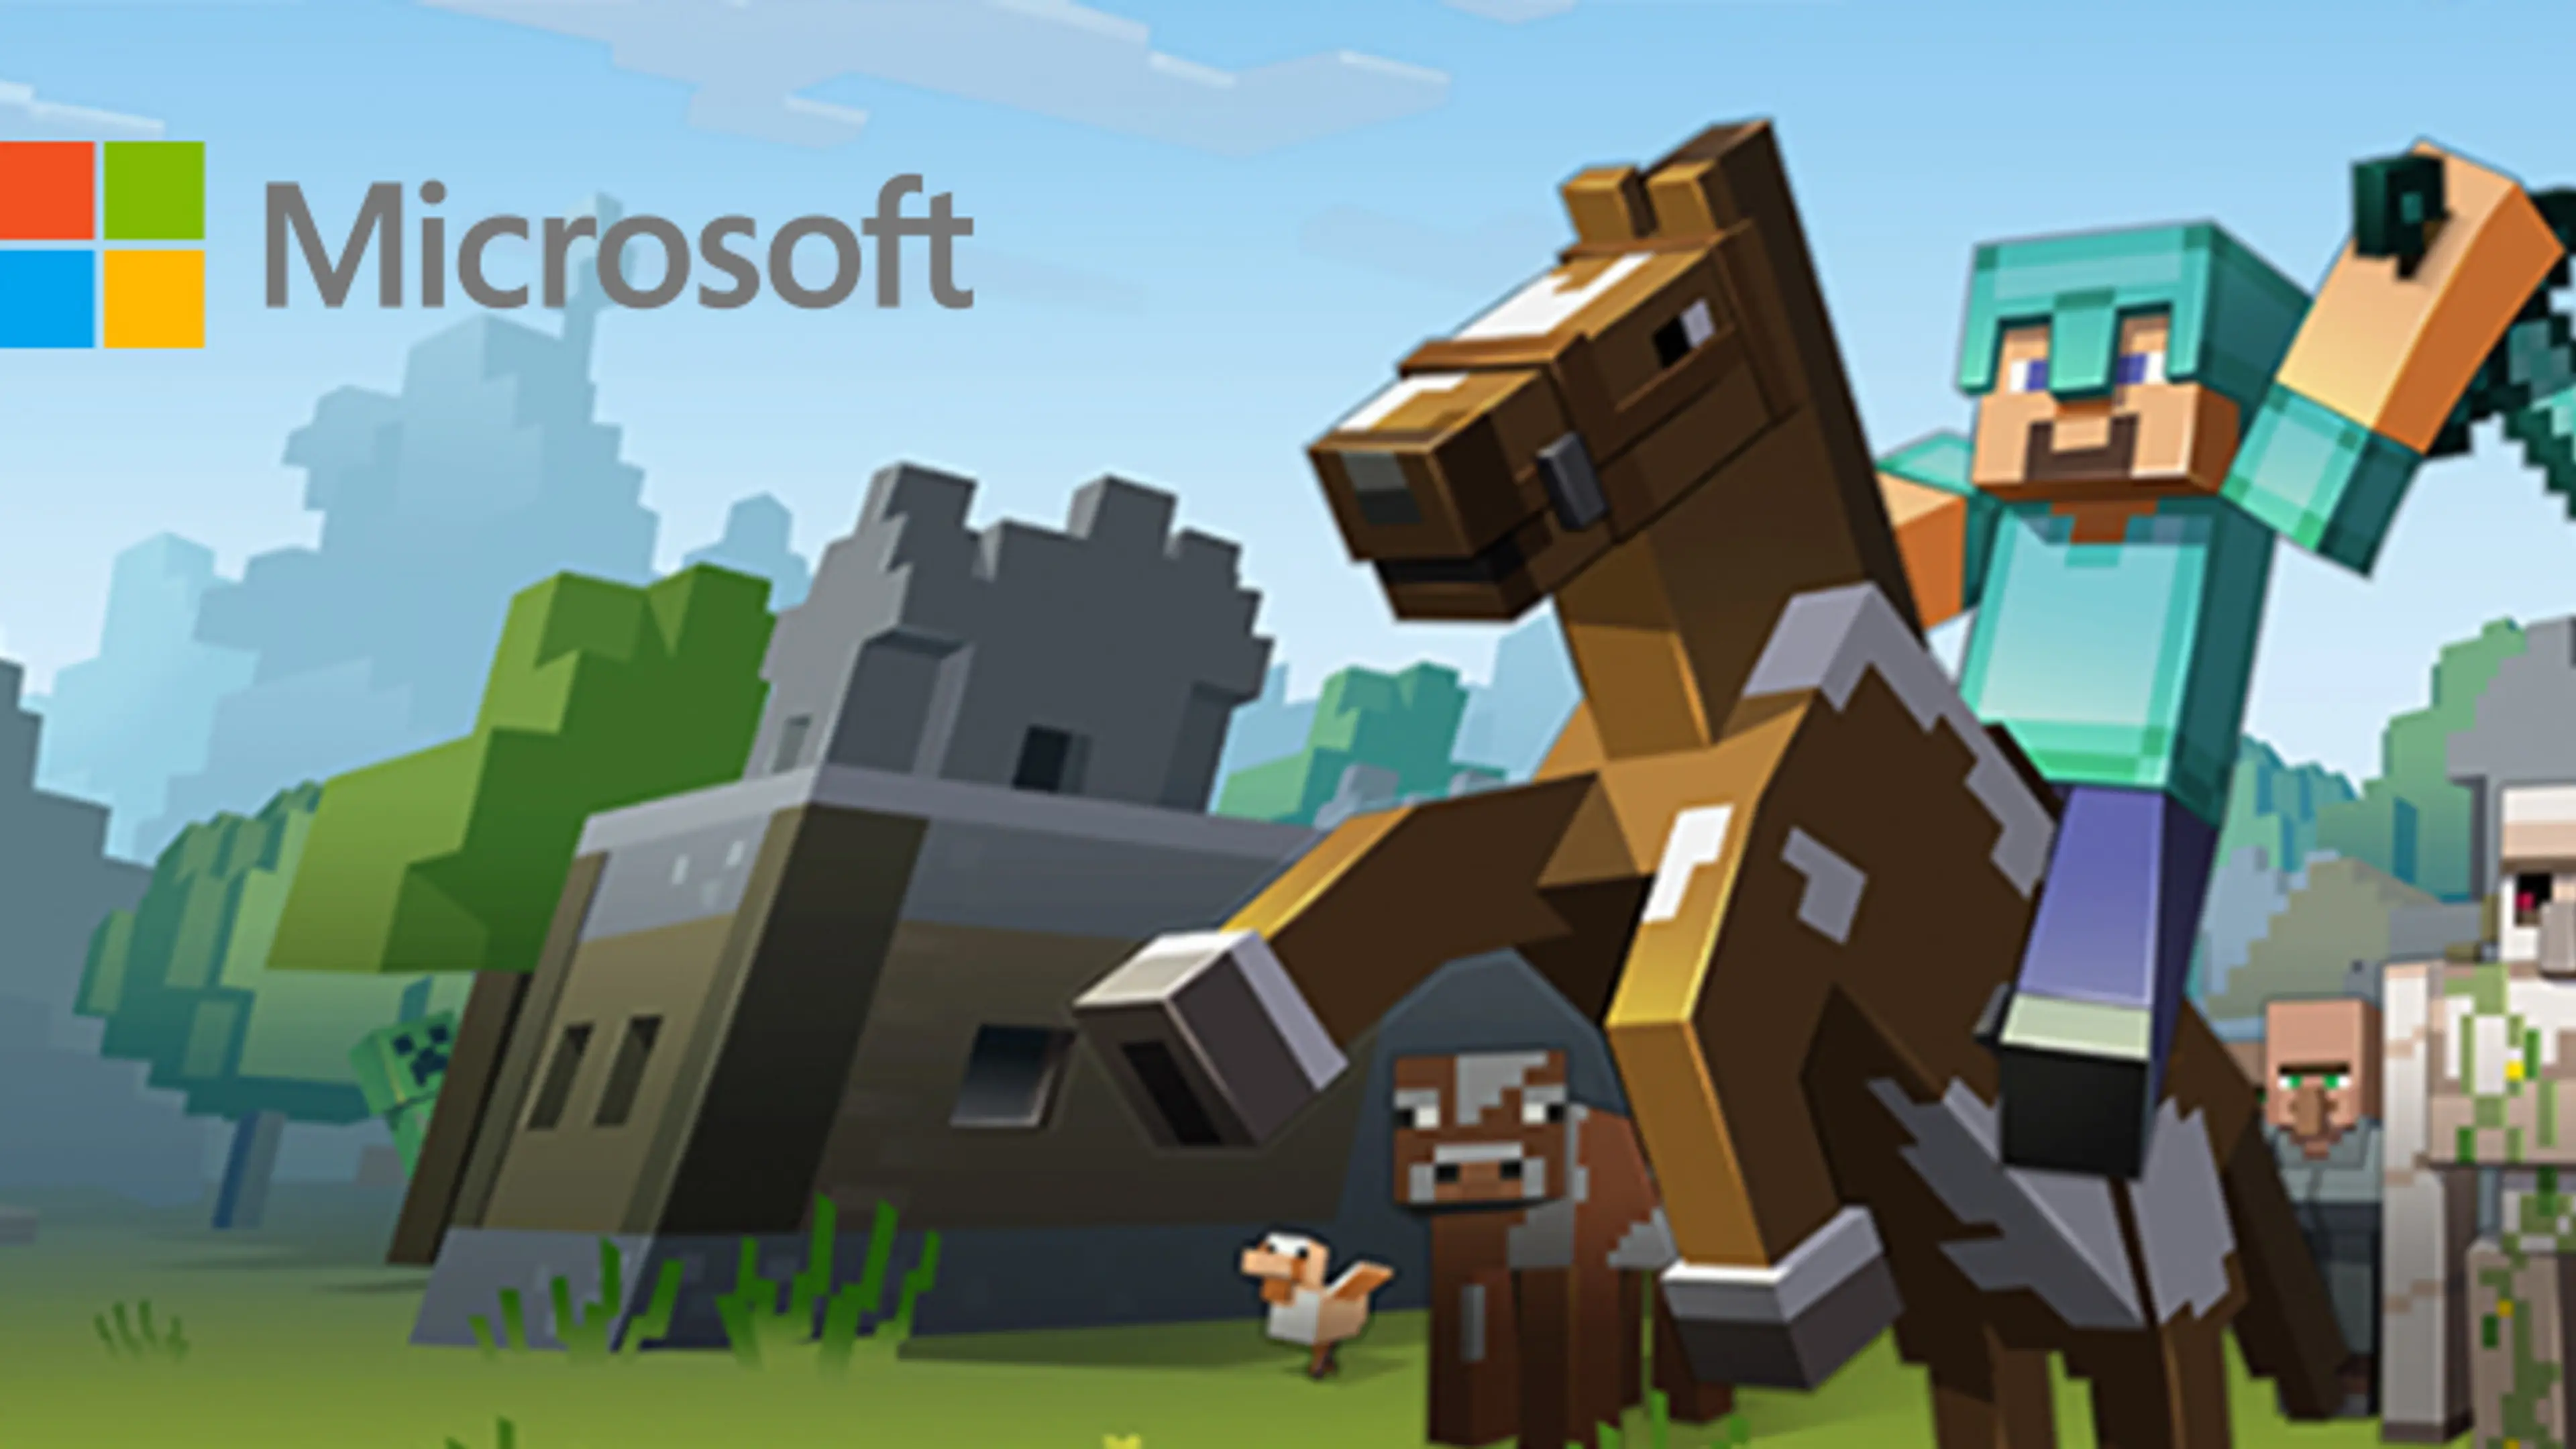 Microsoft buys Mojang, creator of Minecraft, for $2.5 billion